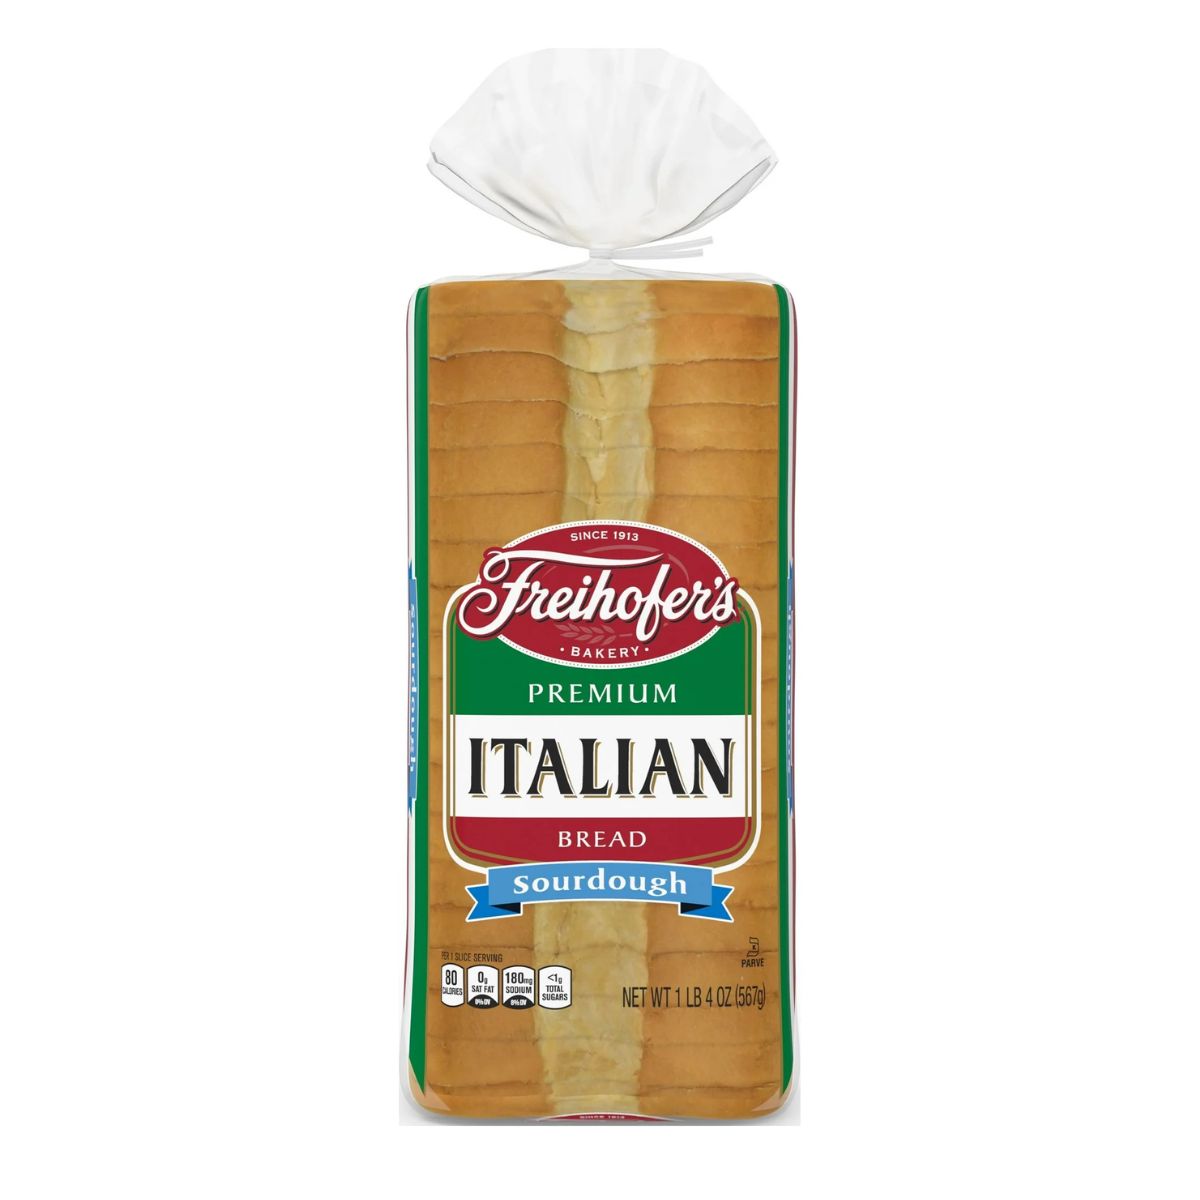 Freihofer's Italian Sourdough Bread